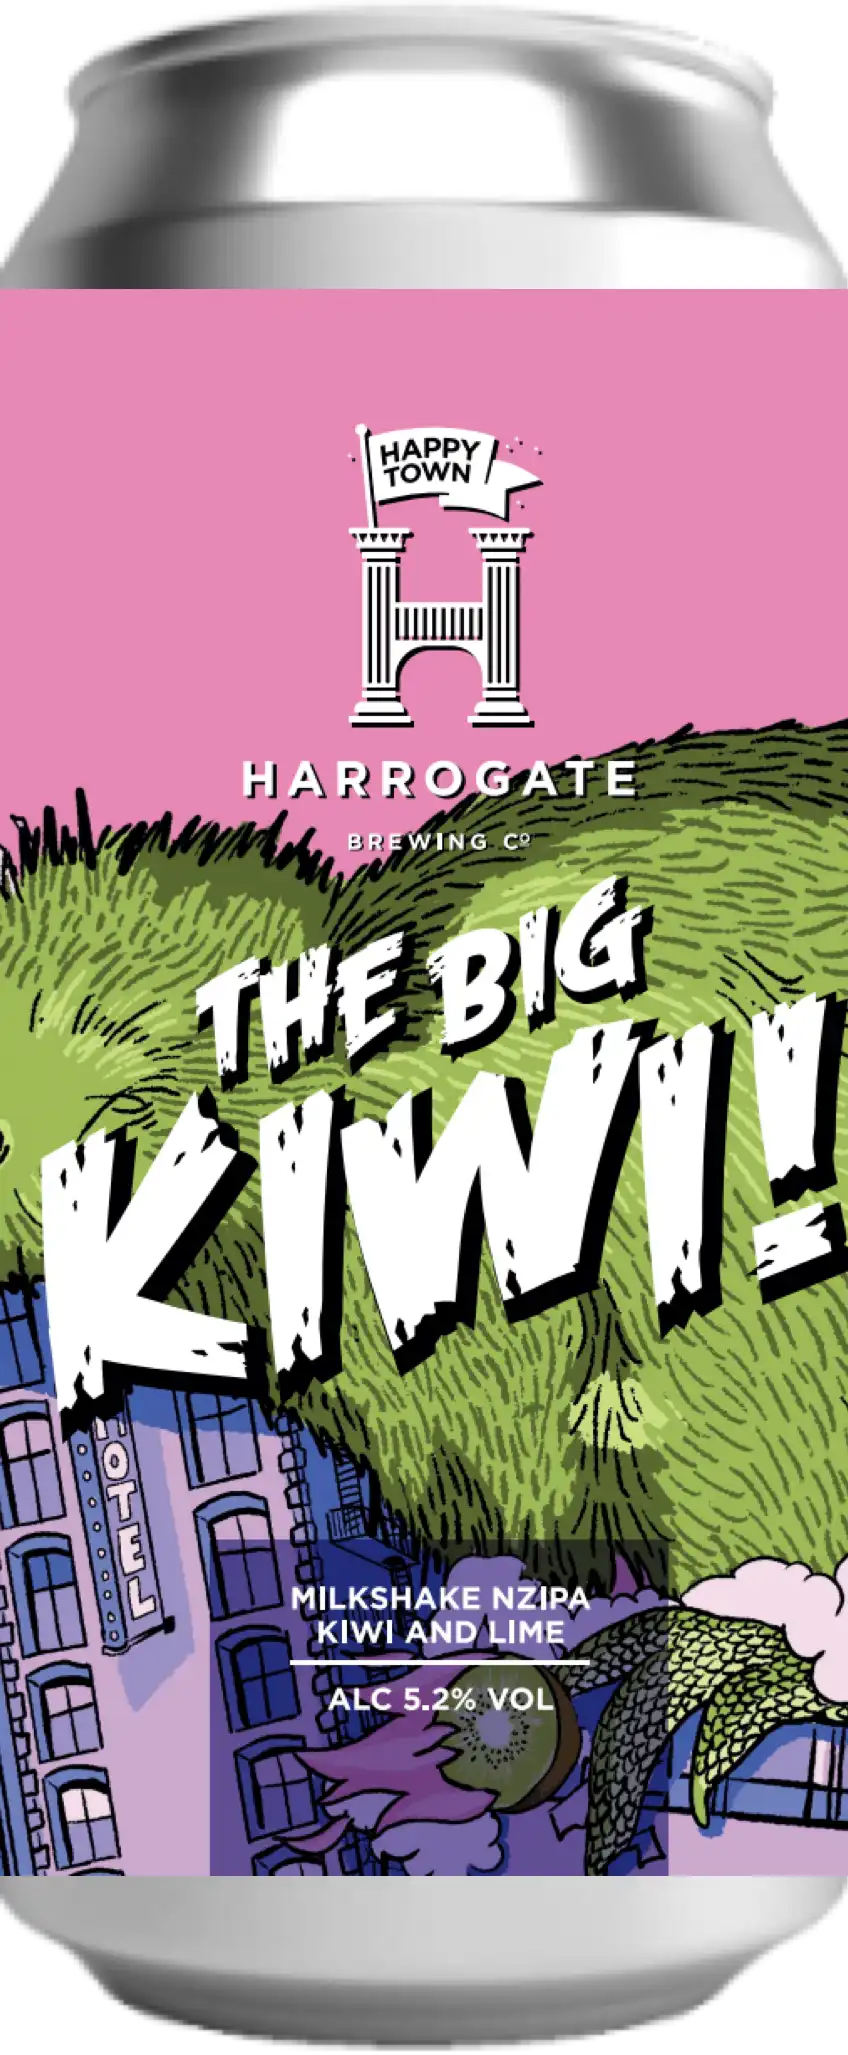 THE BIG KIWI! Kiwi & Lime Milkshake NZIPA, 5.2% - 440ml Can - Harrogate Brewery Collab